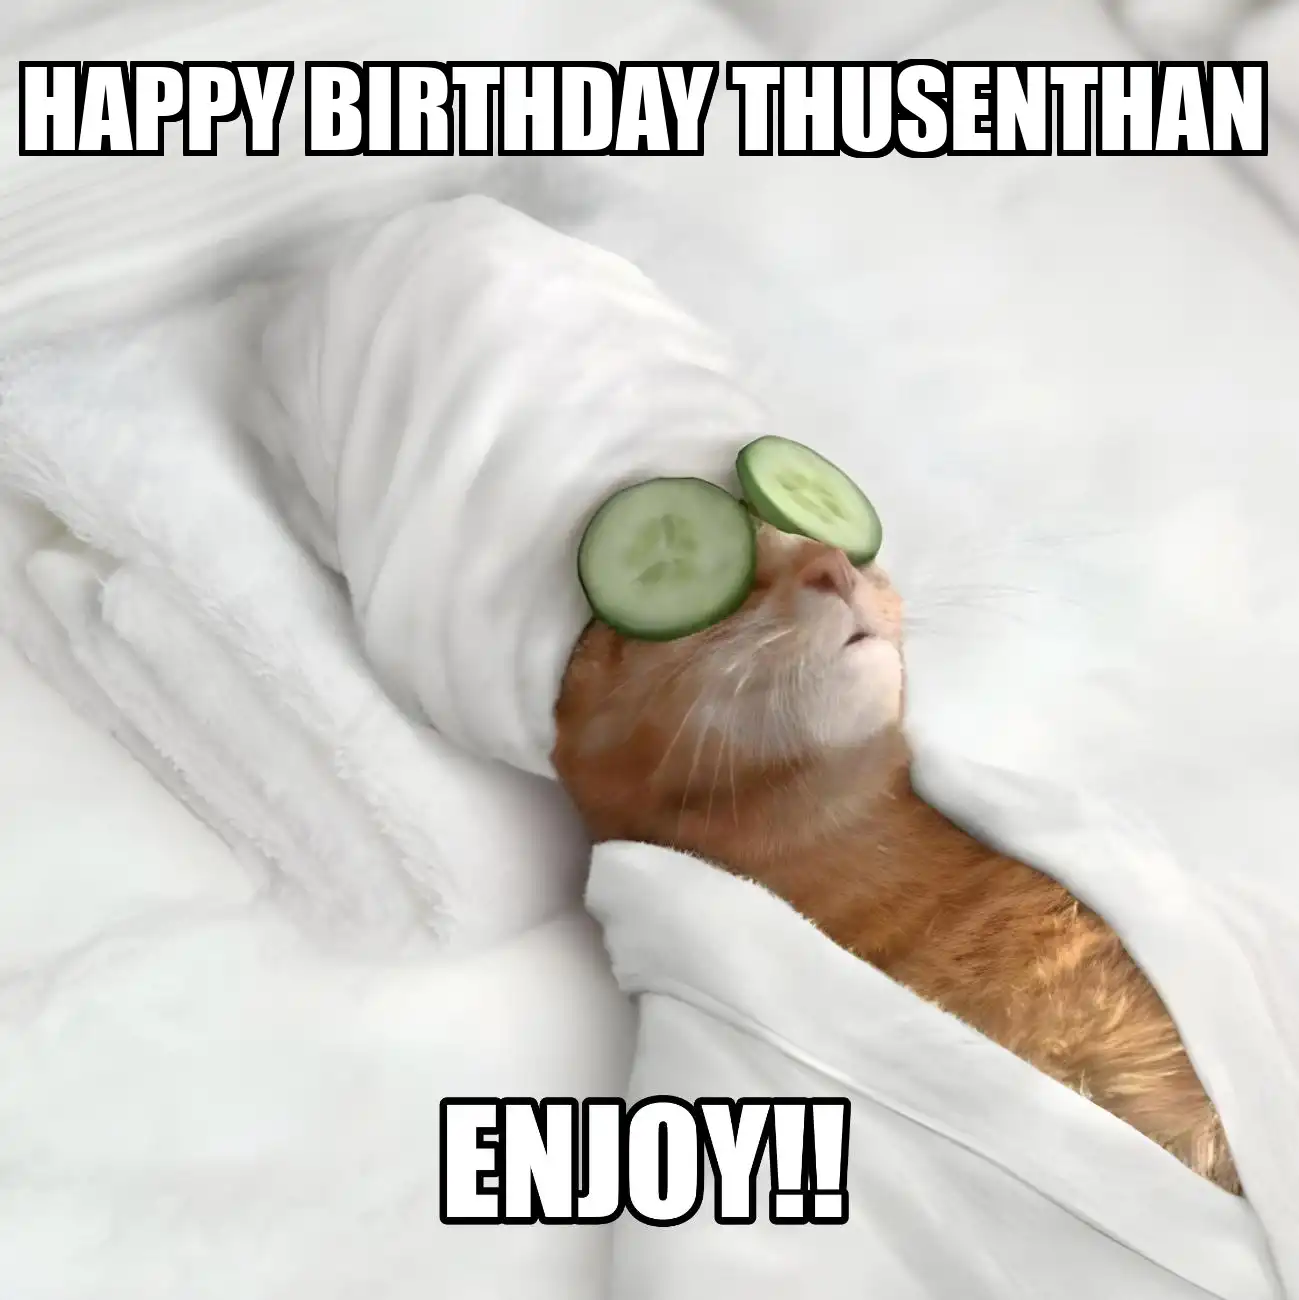 Happy Birthday Thusenthan Enjoy Cat Meme